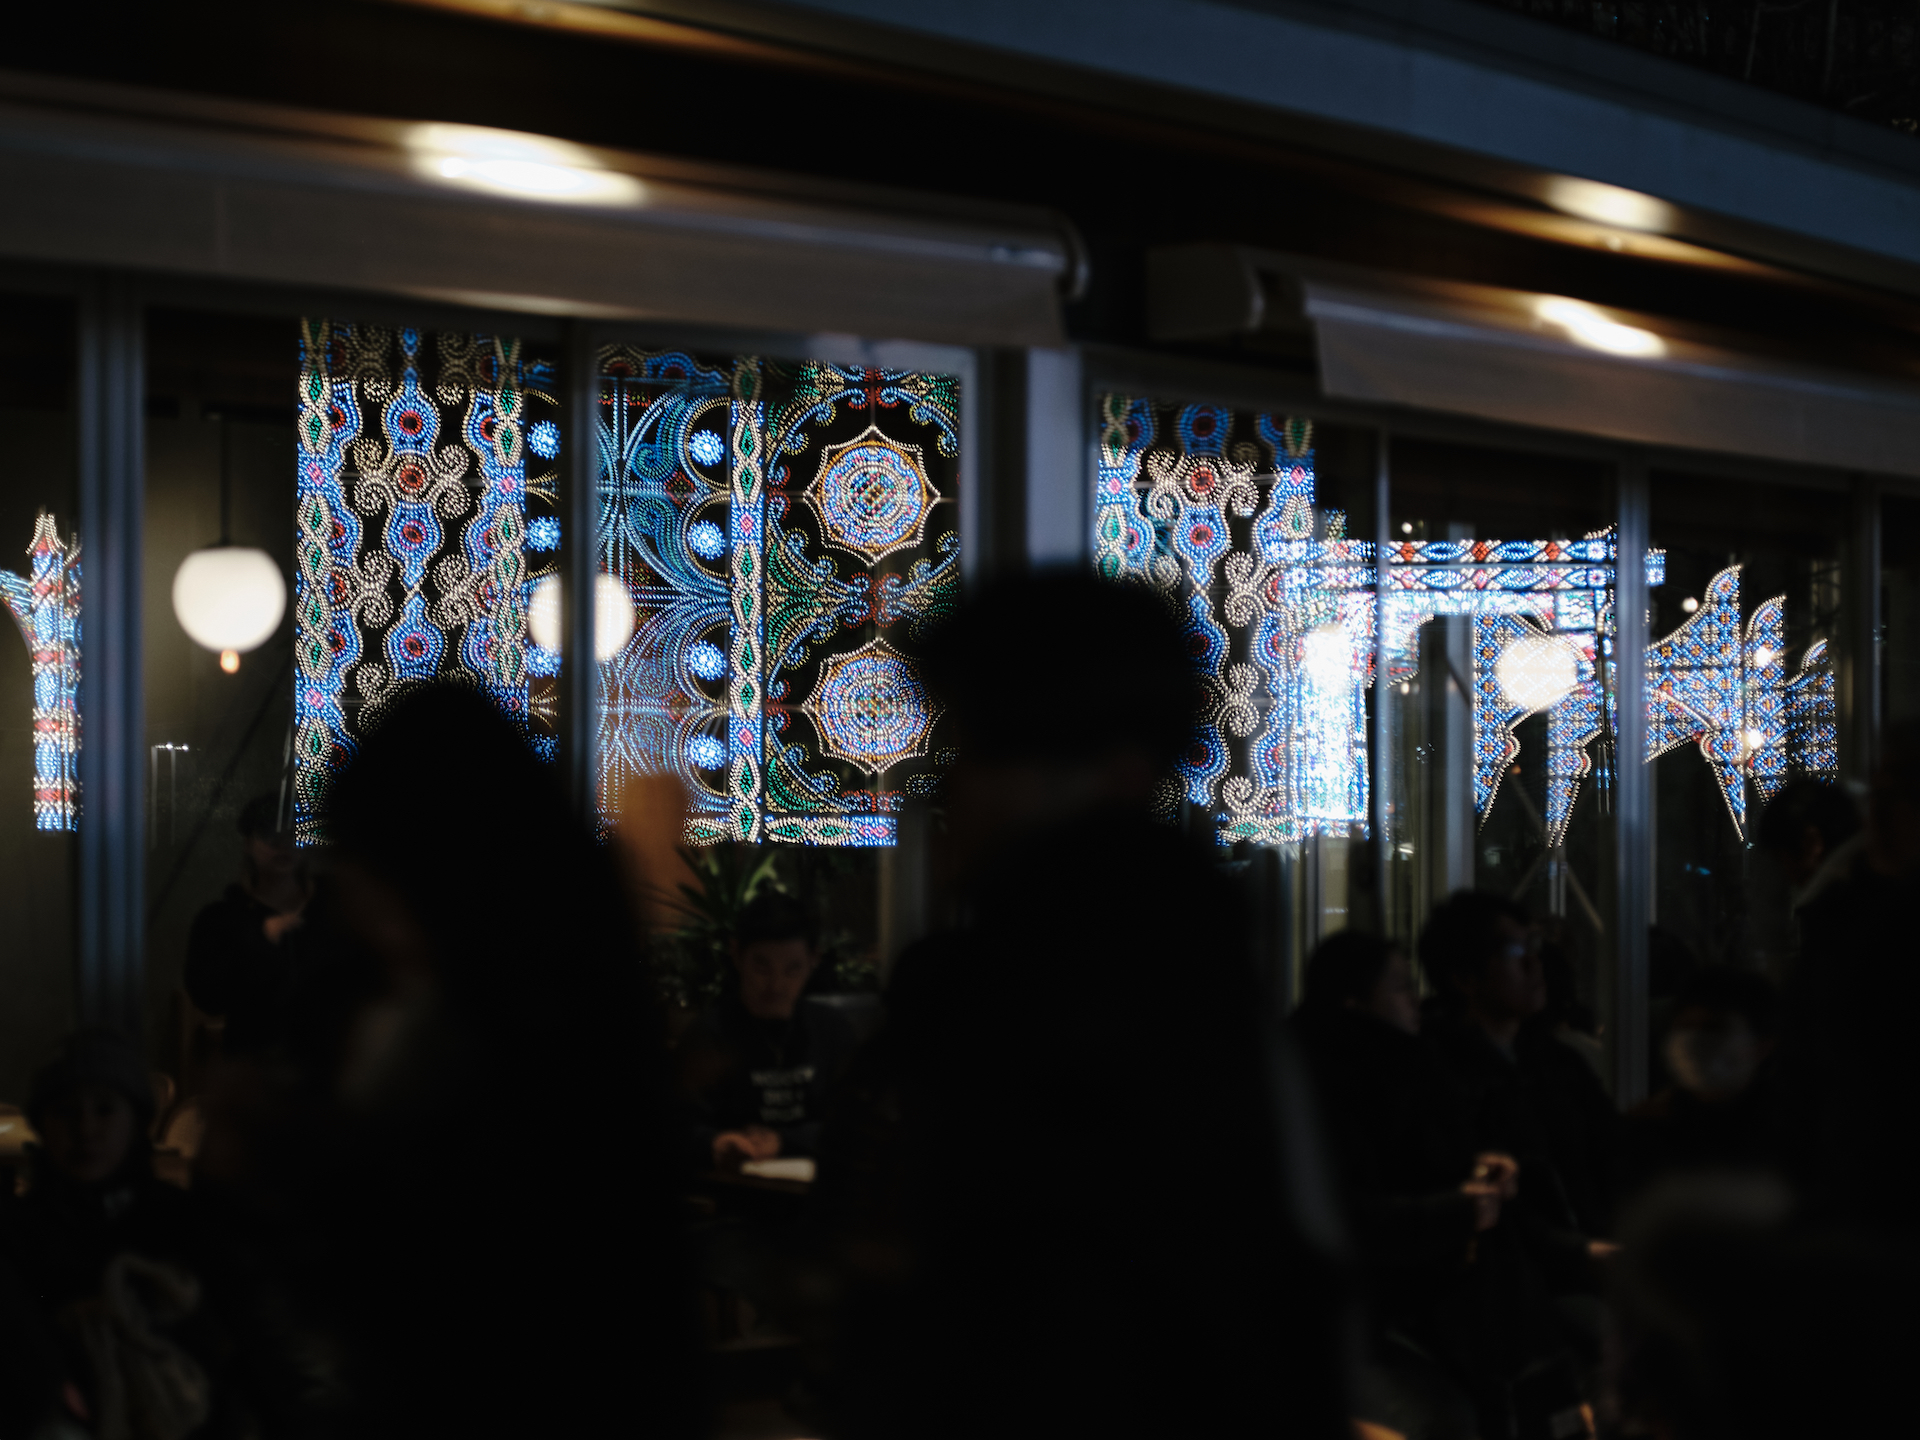 FUJIFILM GFX 50S IIで撮るガラスに反射する光の装飾